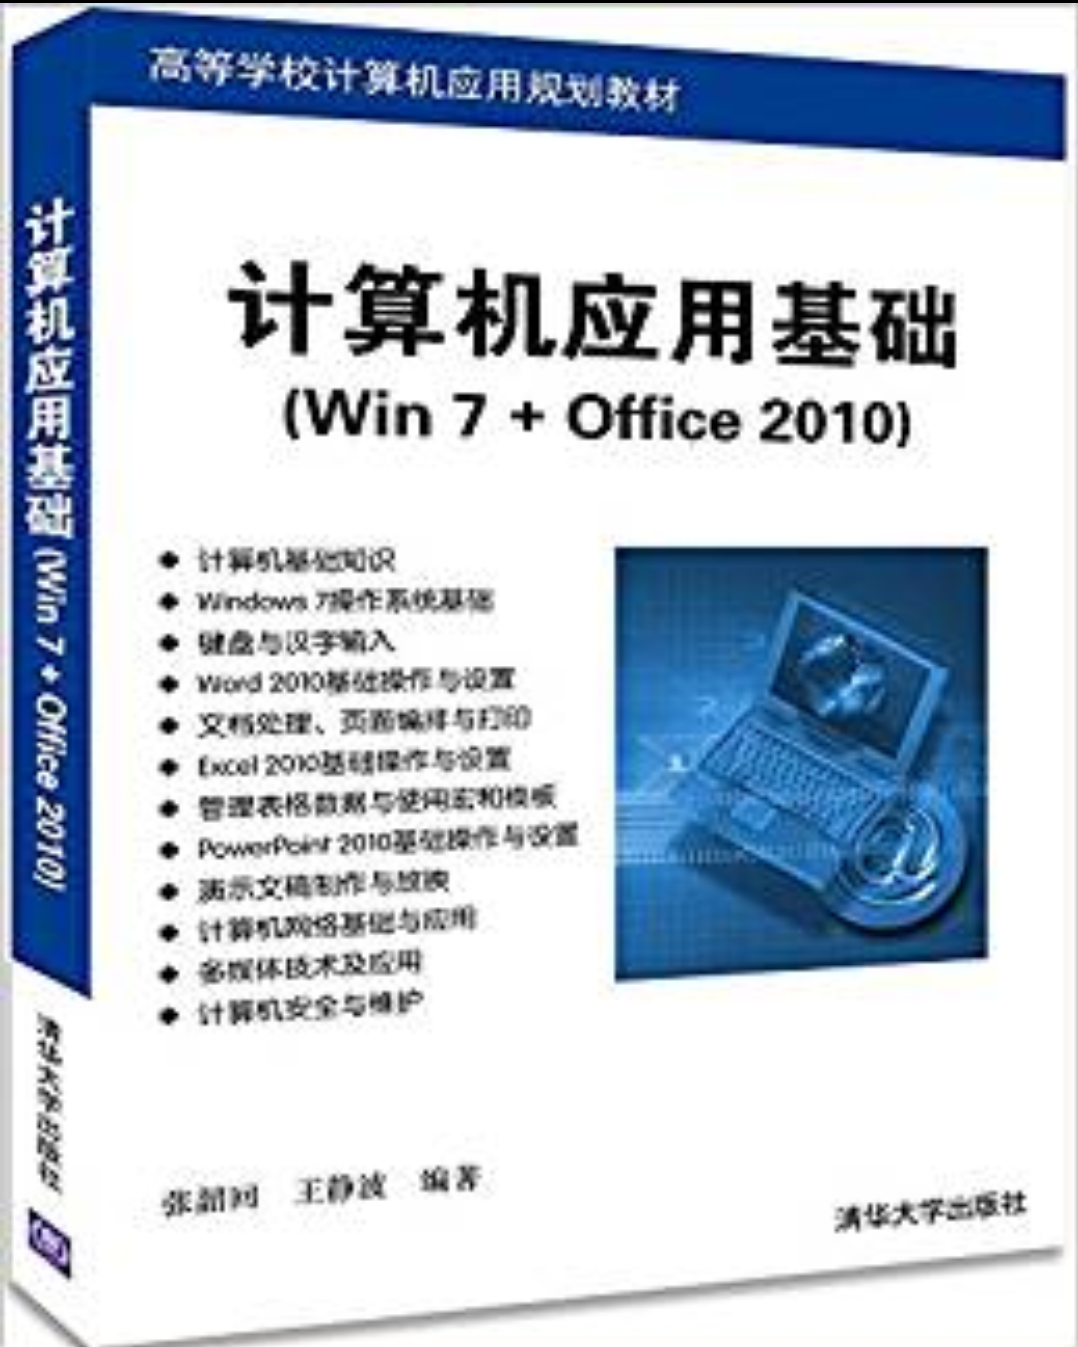 計算機套用基礎(Win 7+Office 2010)(計算機套用基礎Win 7+Office 2010)